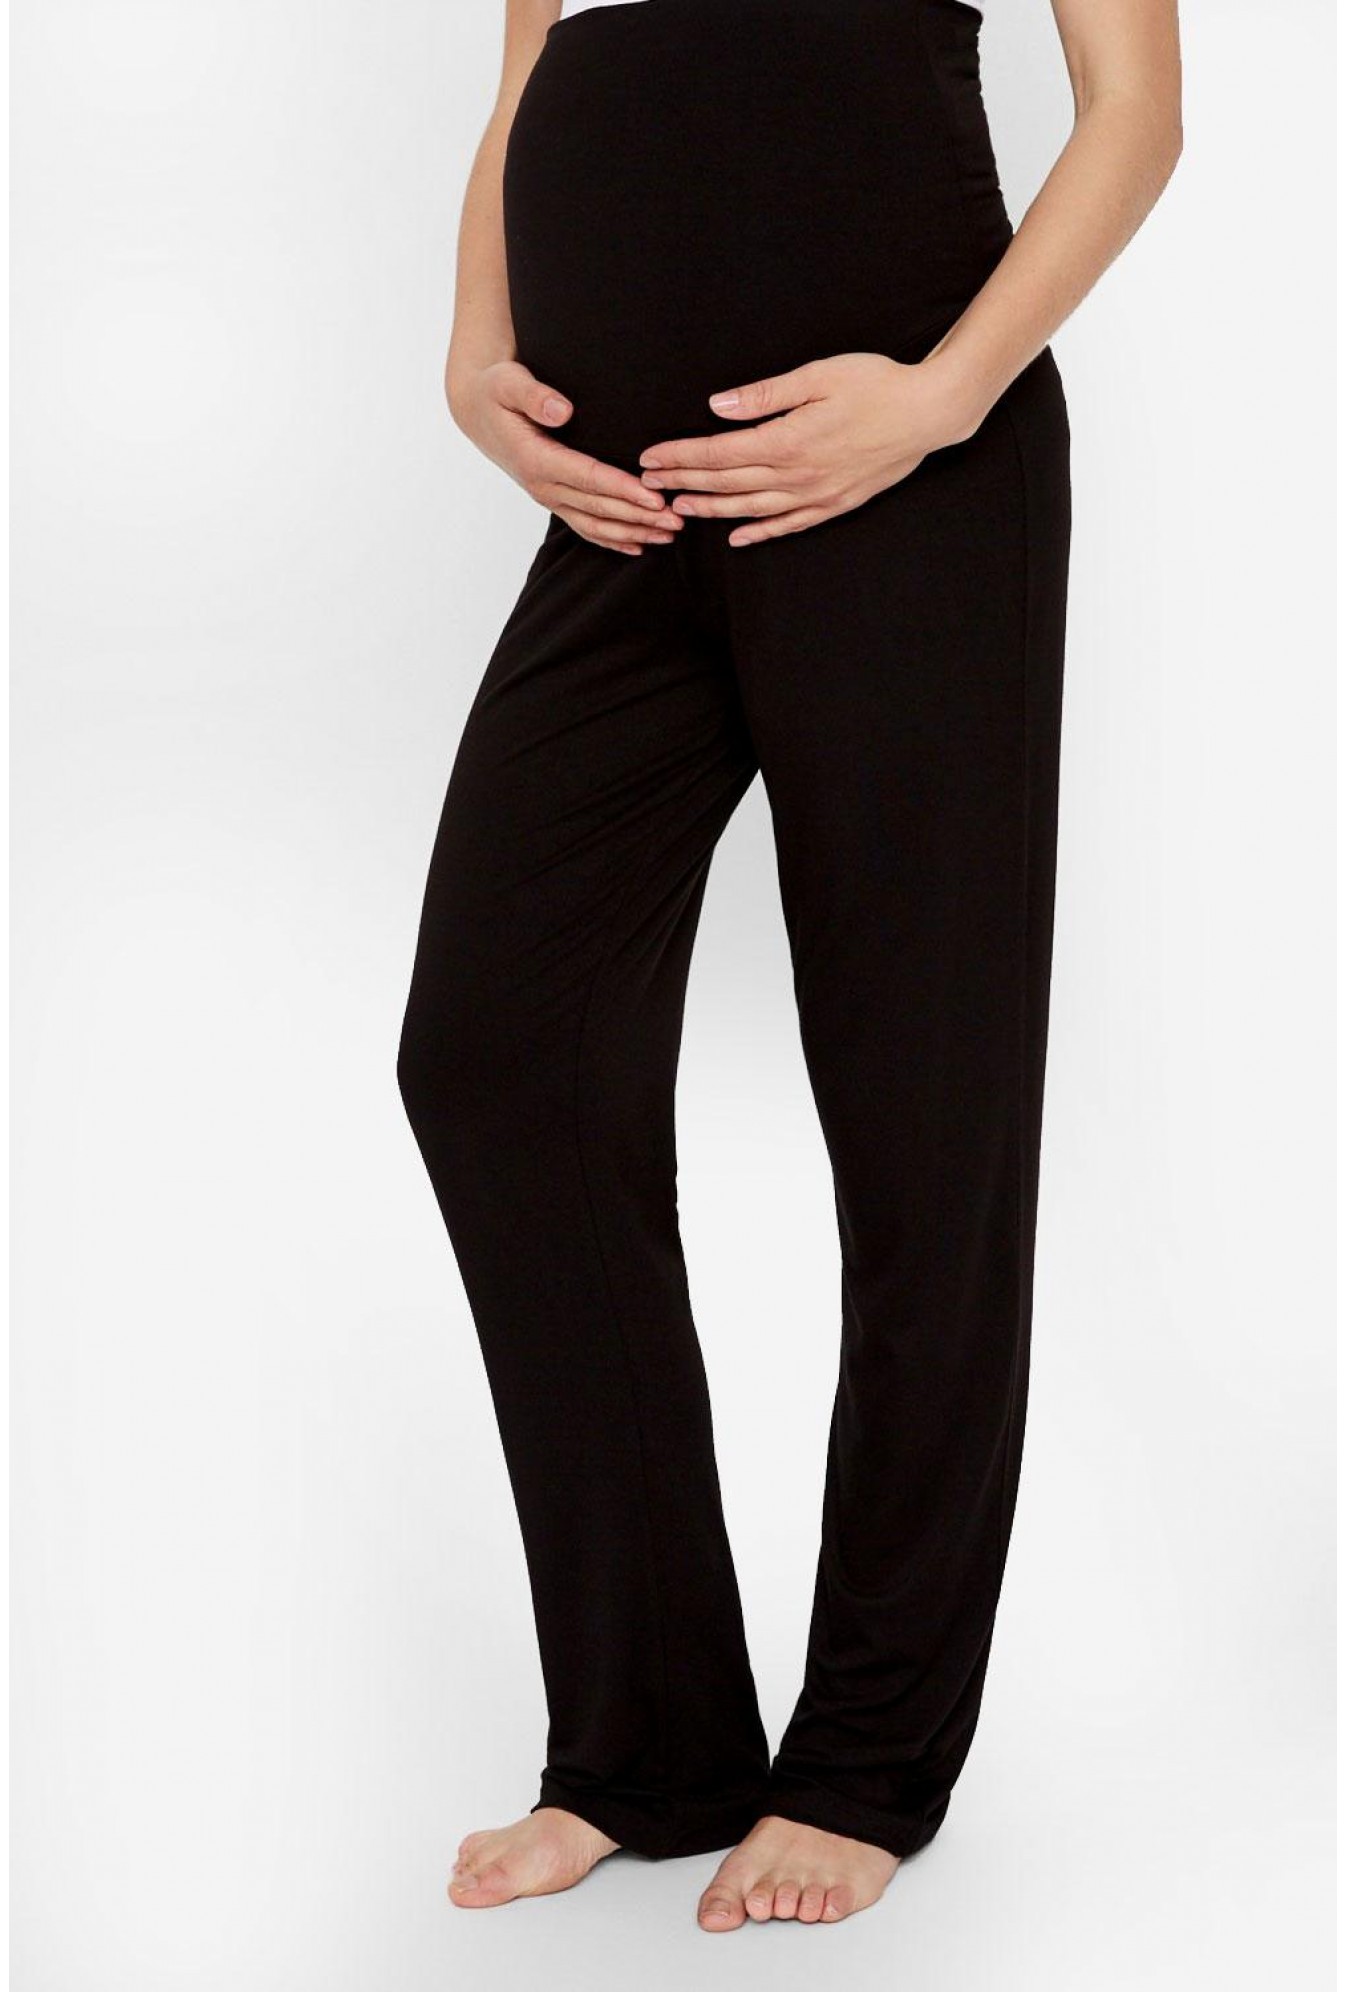 Maternity Yoga Pants, Fold-over Waist, YOGINI FLARES, Workout Dance Pants, Maternity  Clothes 